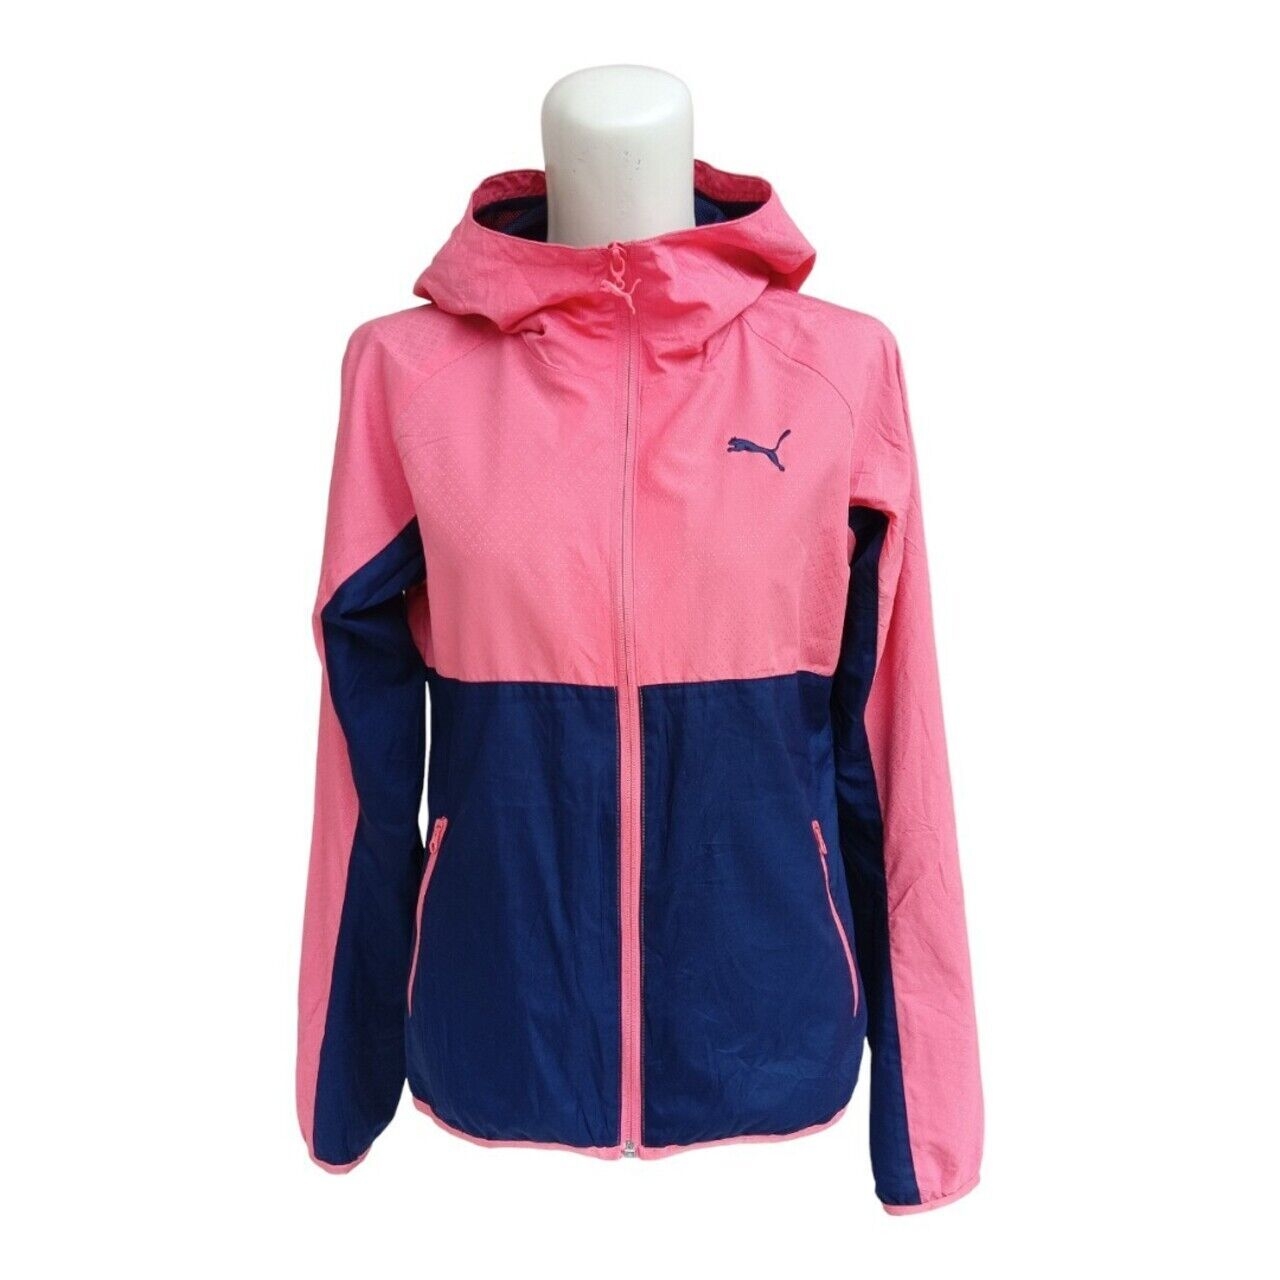 Puma Navy & Pink Jacket